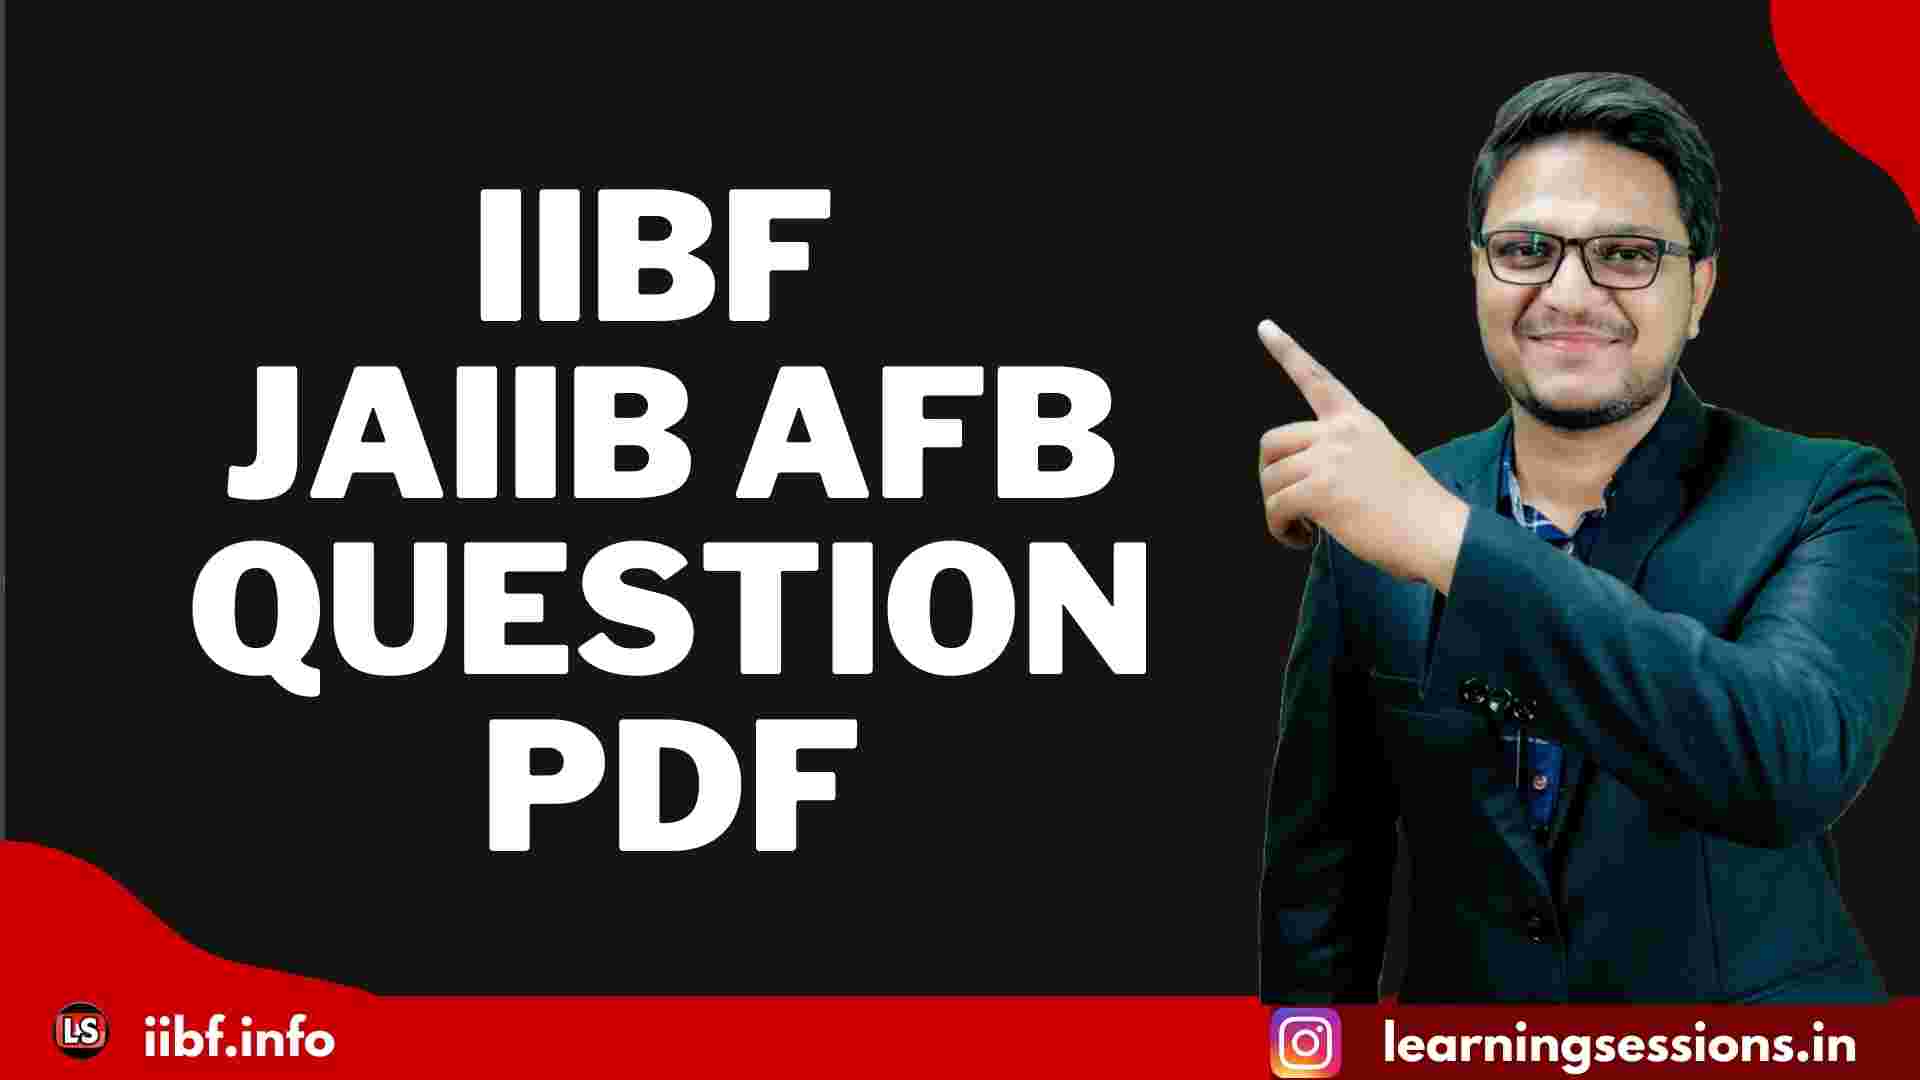 IIBF JAIIB AFB QUESTION PDF-ACCOUNTING AND FINANCE BANKING